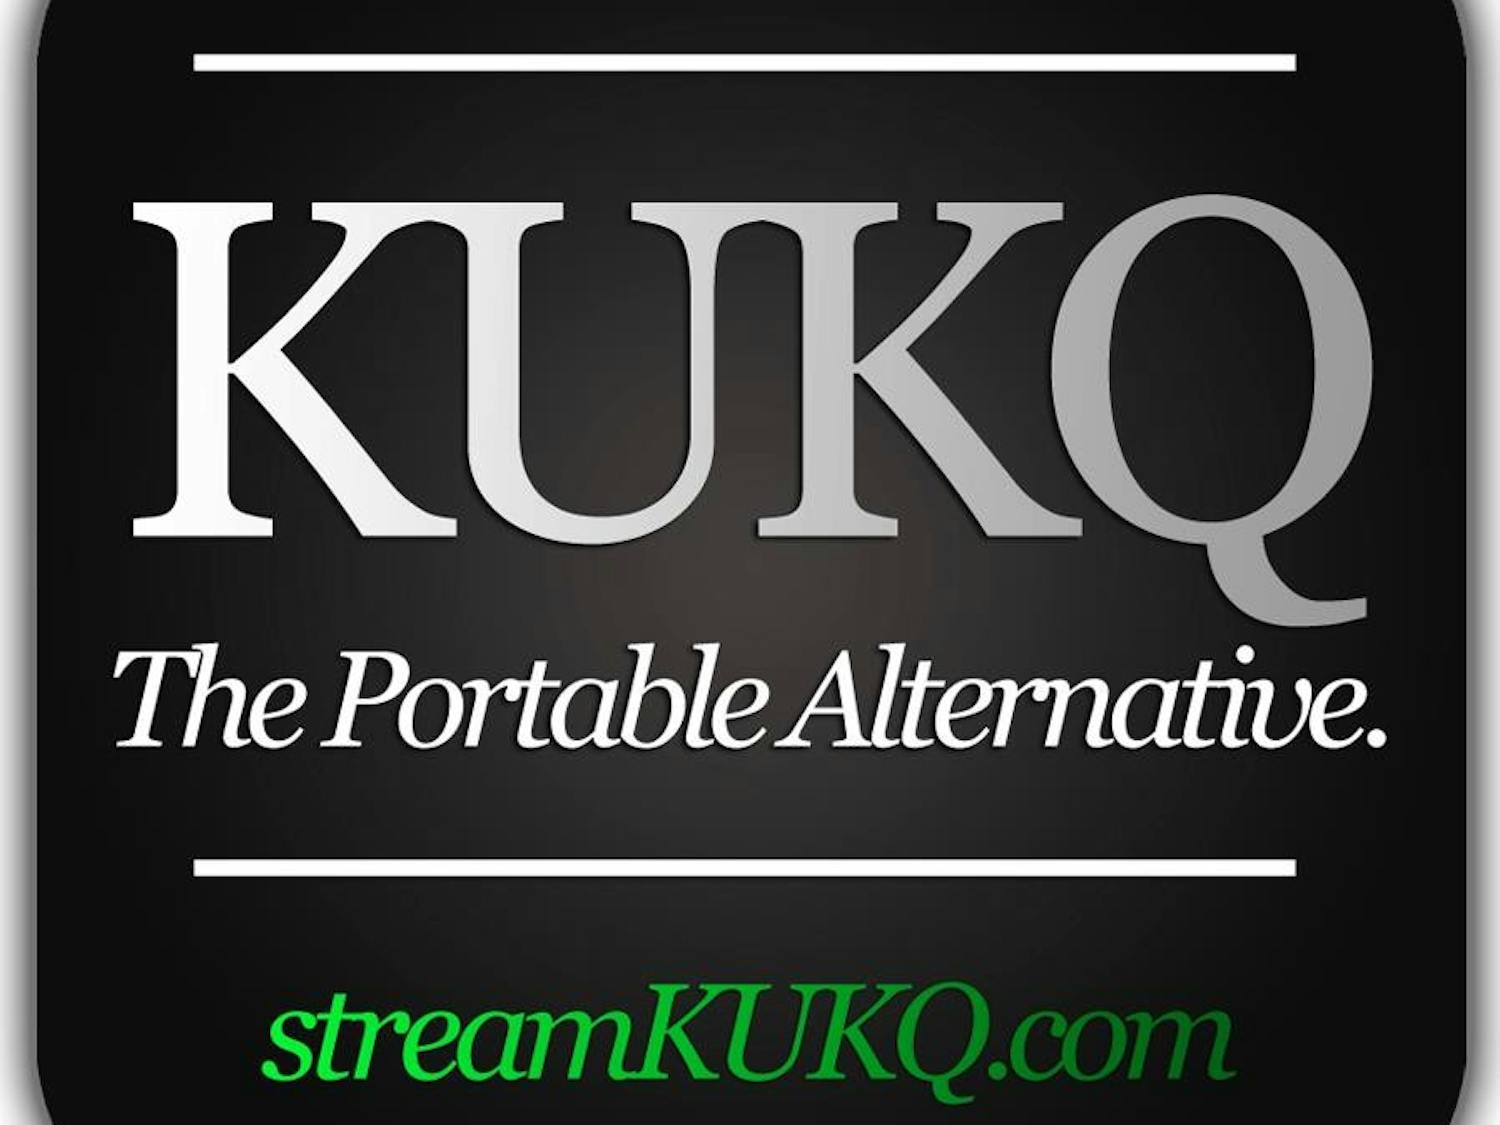 KUKQ's new logo. Photo from their website, kukq.com.